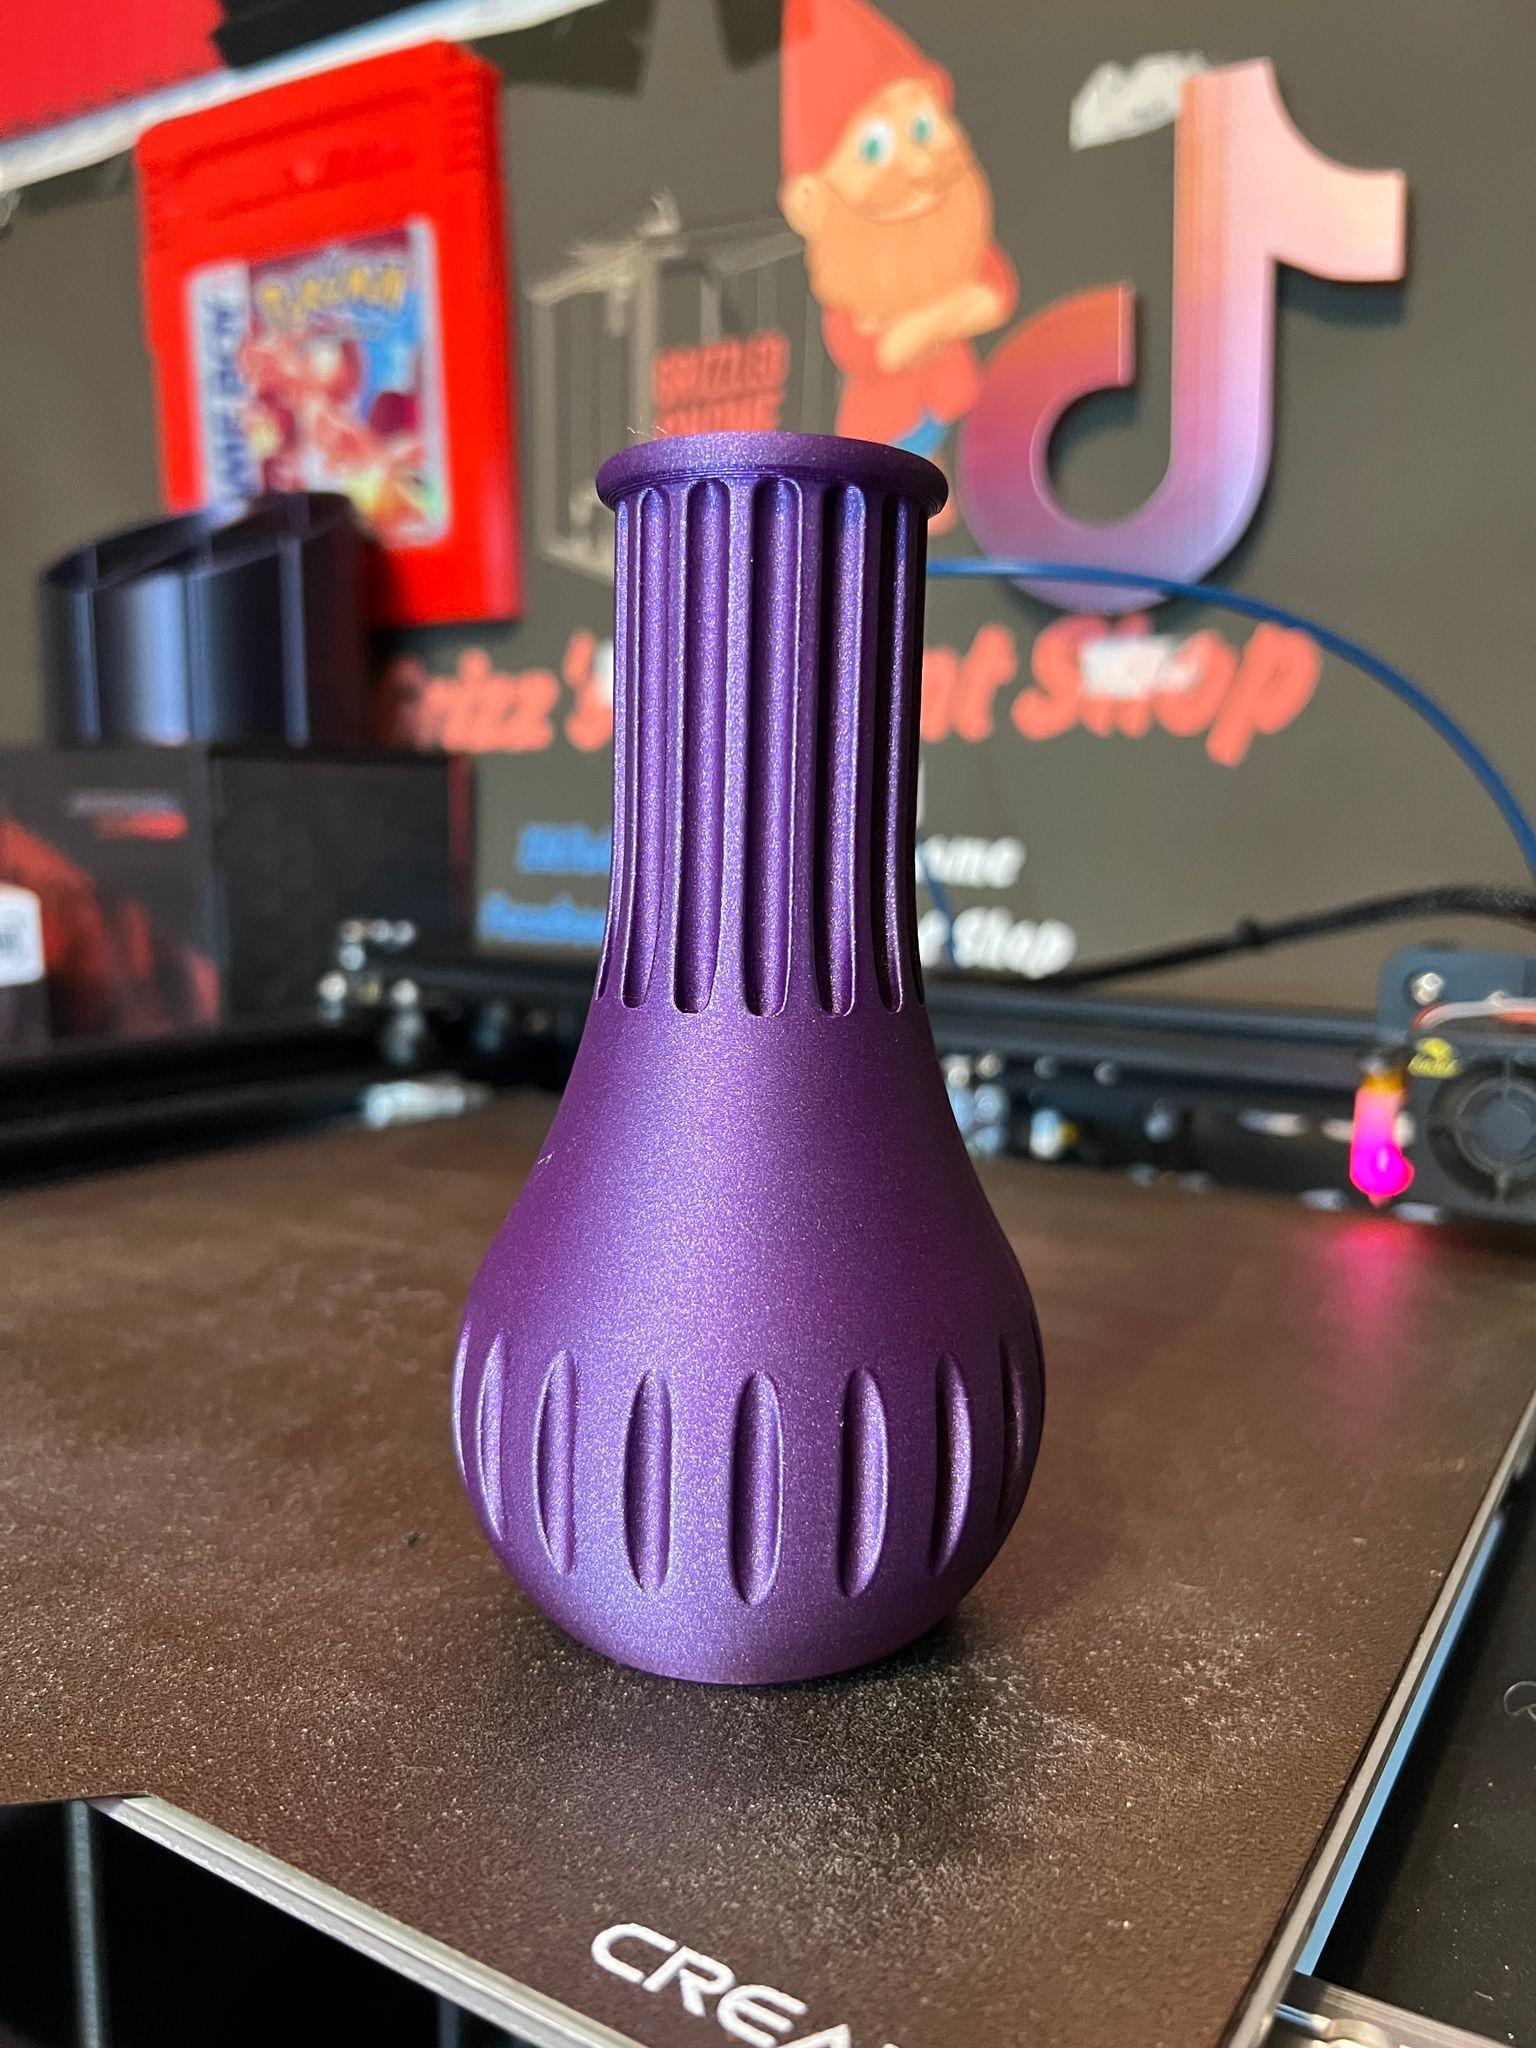 Simple vase - Industrial - Print in place! 3d model